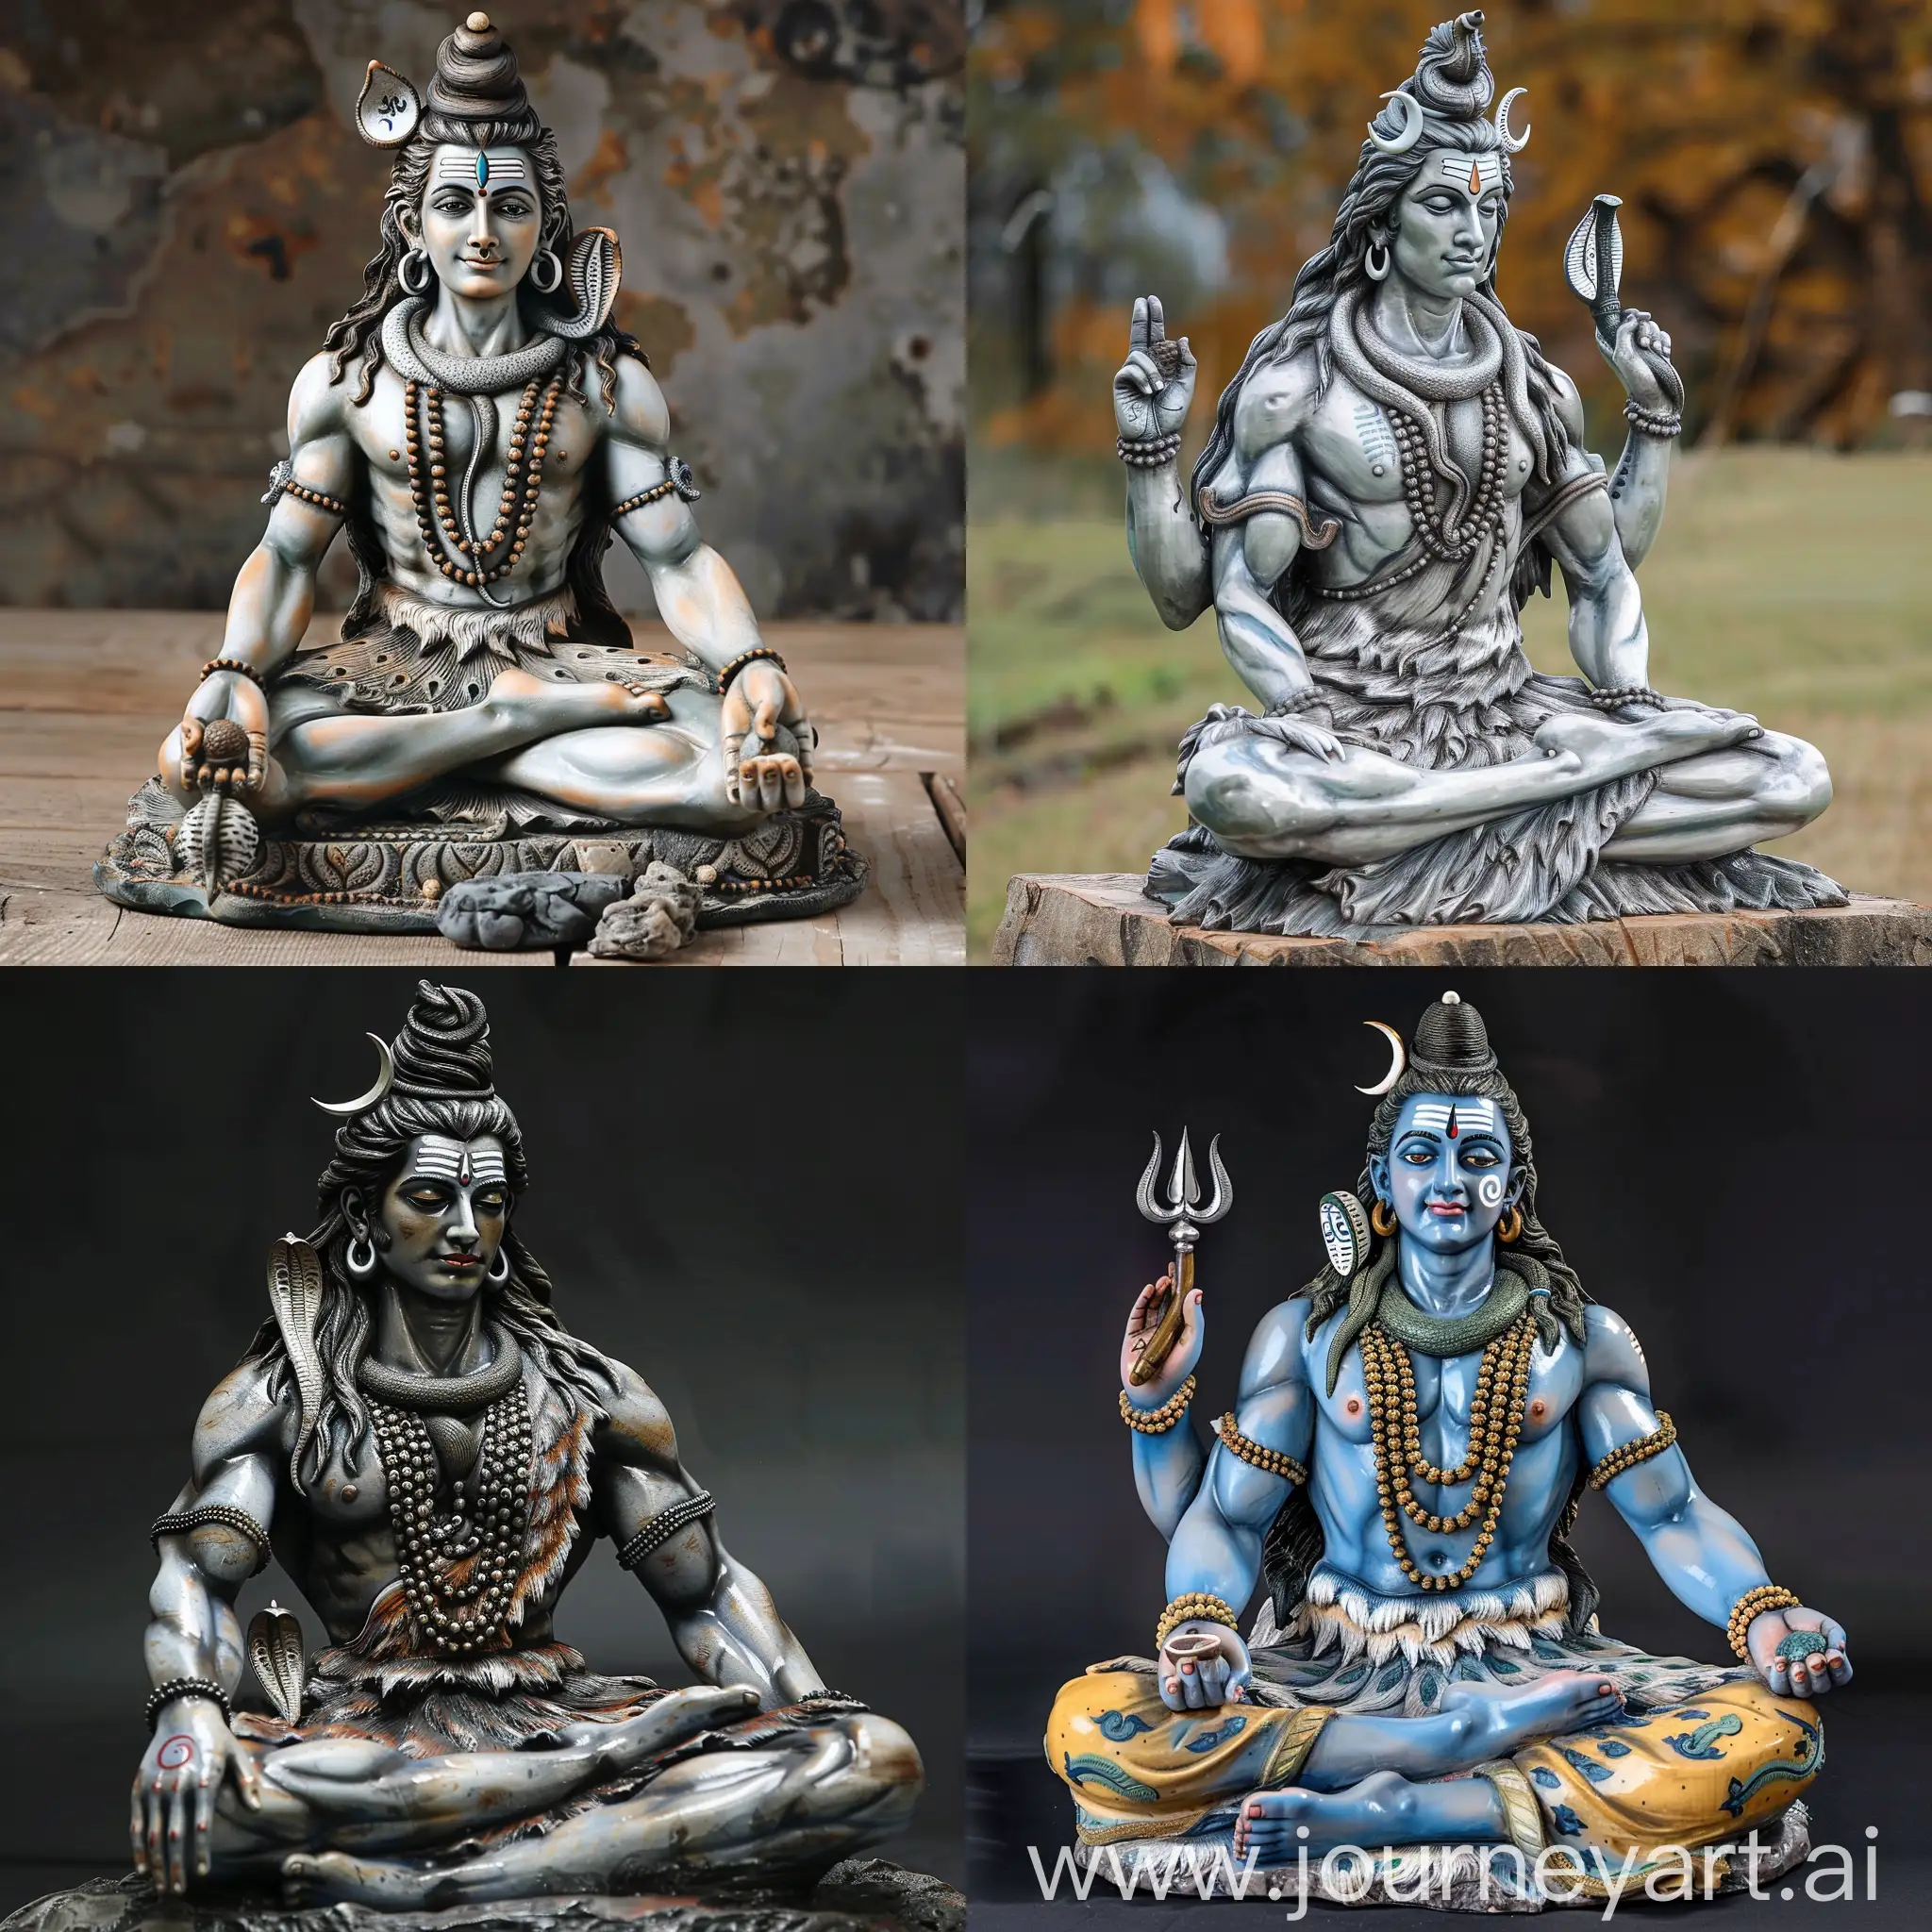 Majestic-Statue-of-Lord-Shiva-in-Vibrant-Colors